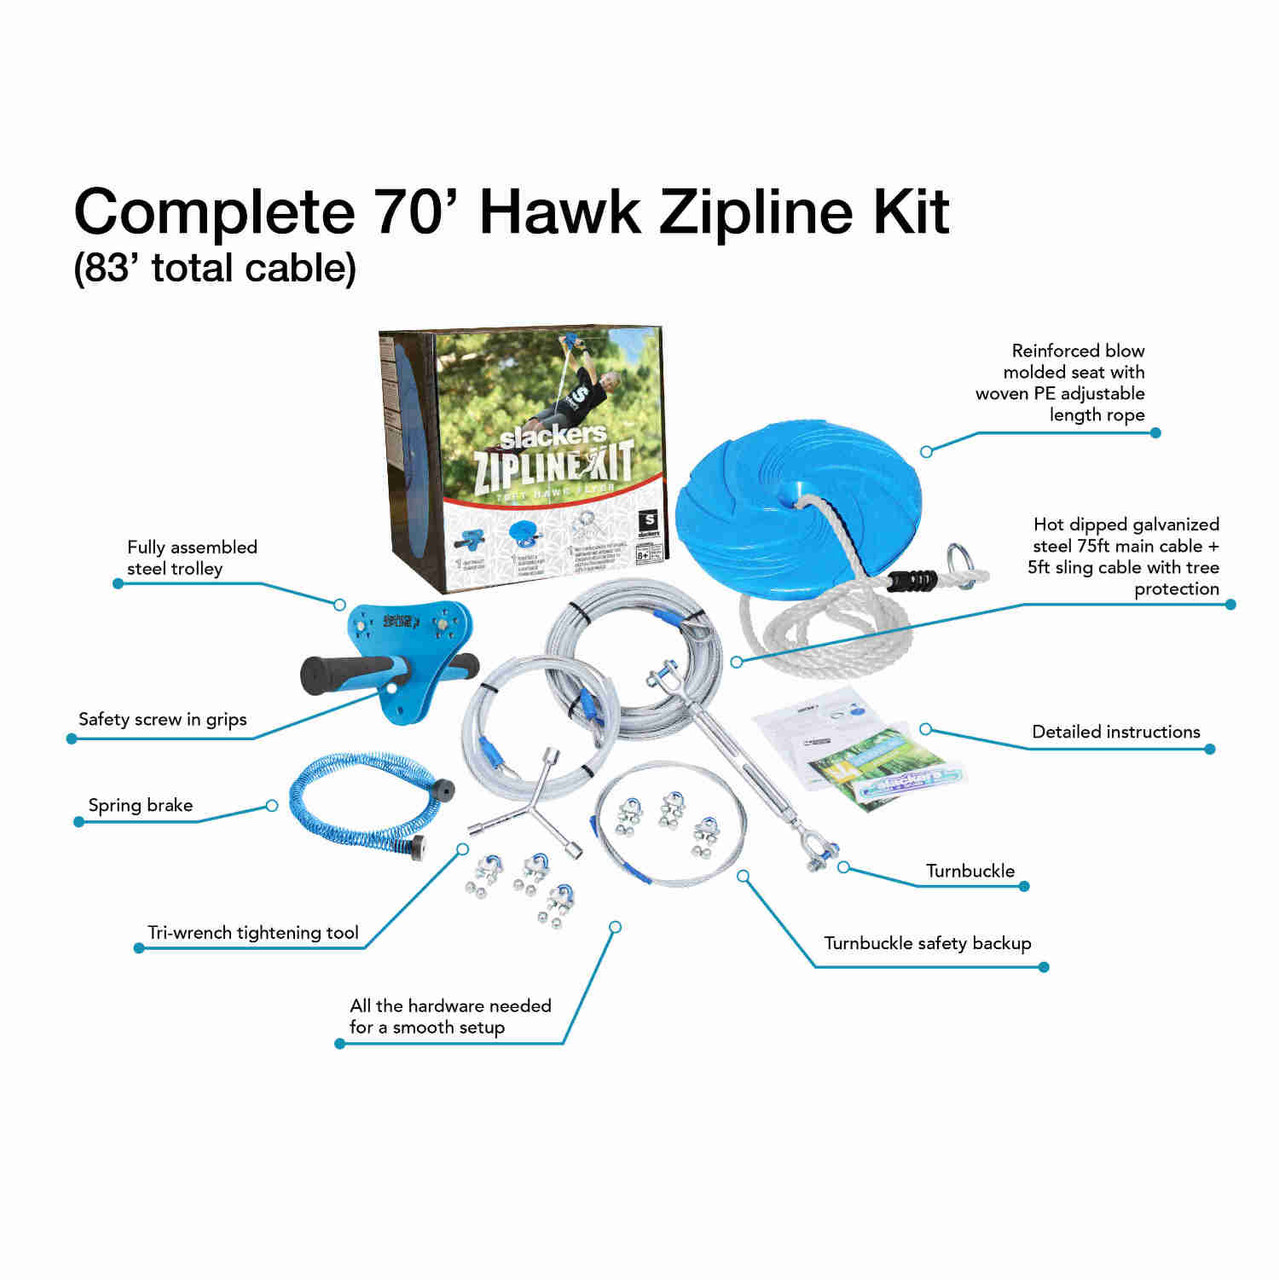 Slackers 70 ft Hawk Zipline Kit with contents explained - SLA-513